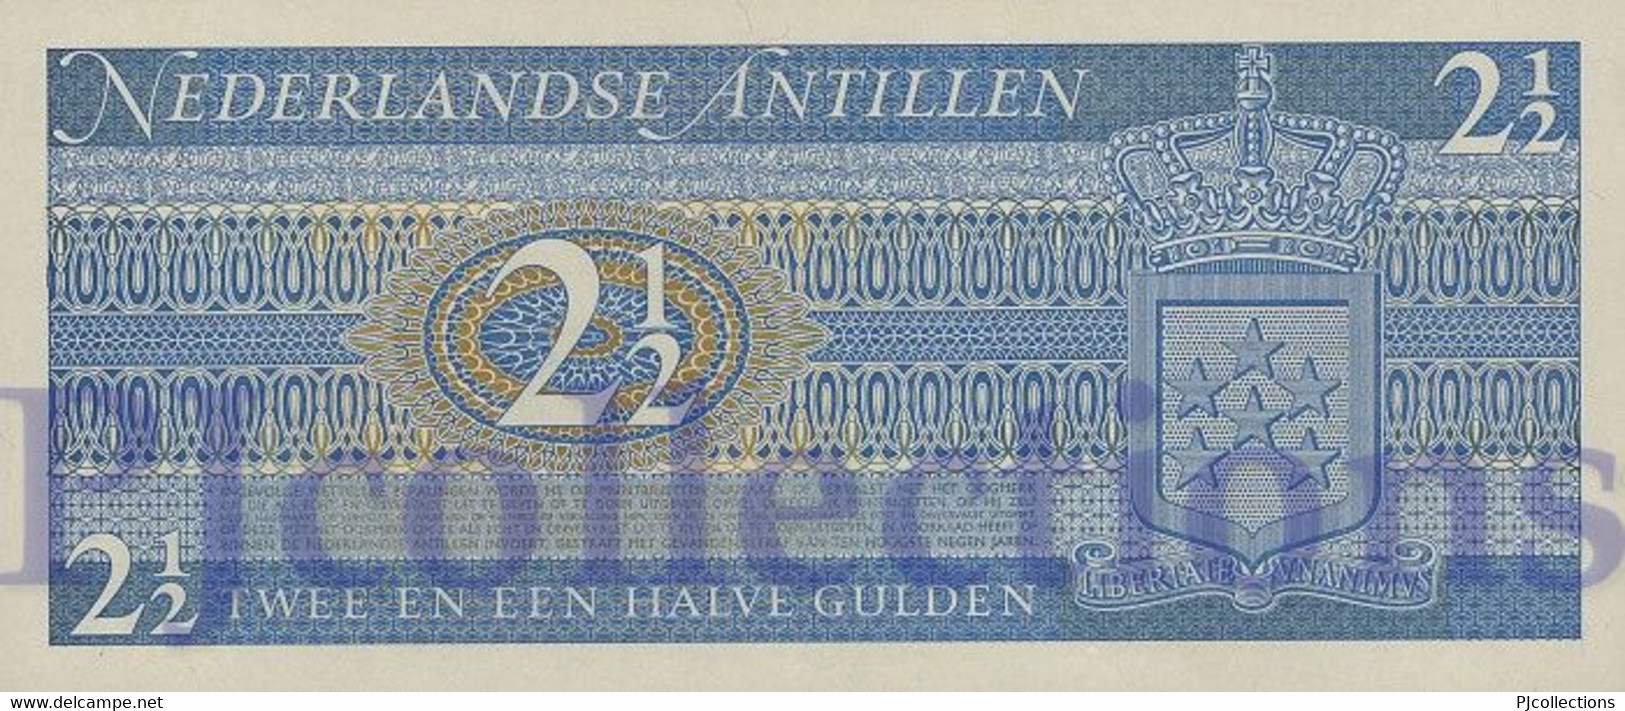 LOT NETHERLANDS ANTILLES 2,5 GULDEN 1970 PICK 21a UNC X 3 PCS - Niederländische Antillen (...-1986)